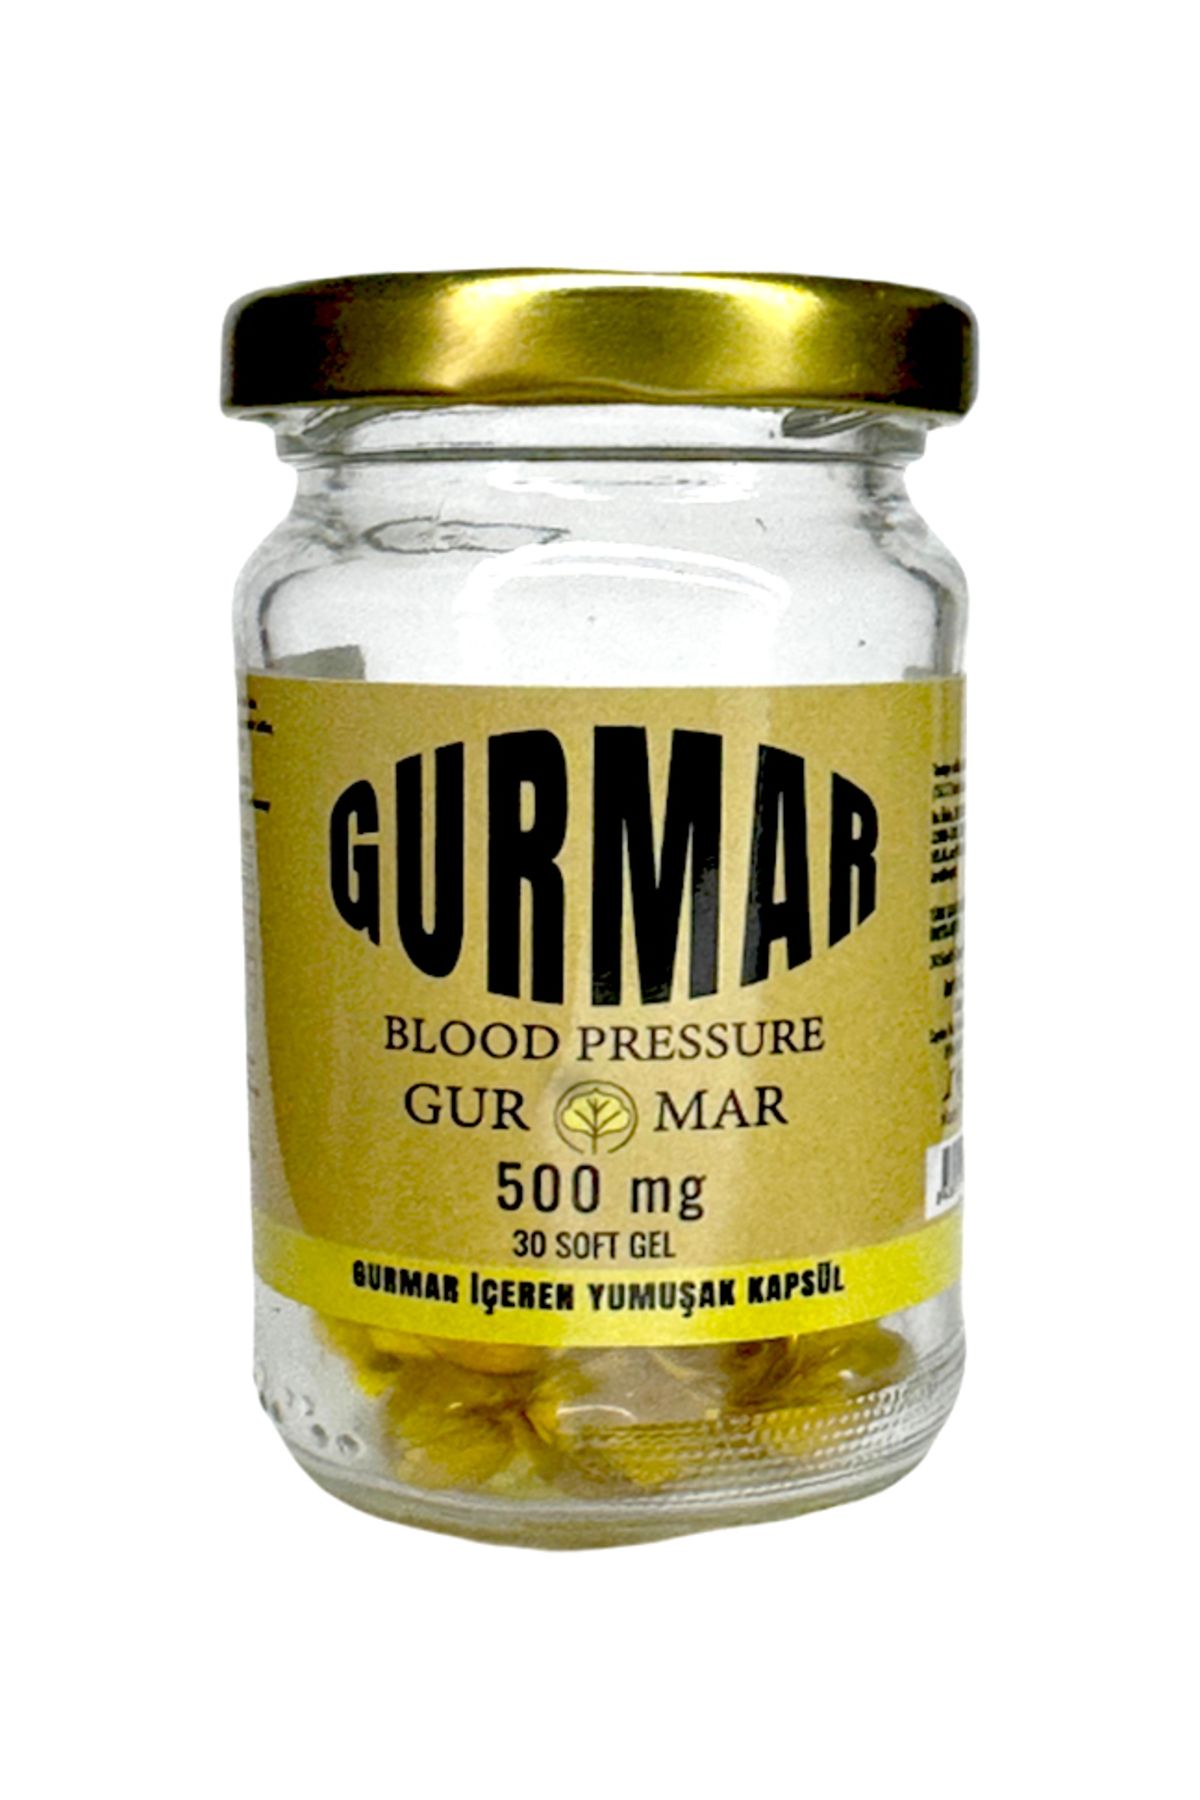 Gürmar Gurmar Kapsül - 30 Kapsül X 500 mg Yumuşak Kapsül - Blood Pressure GurMar